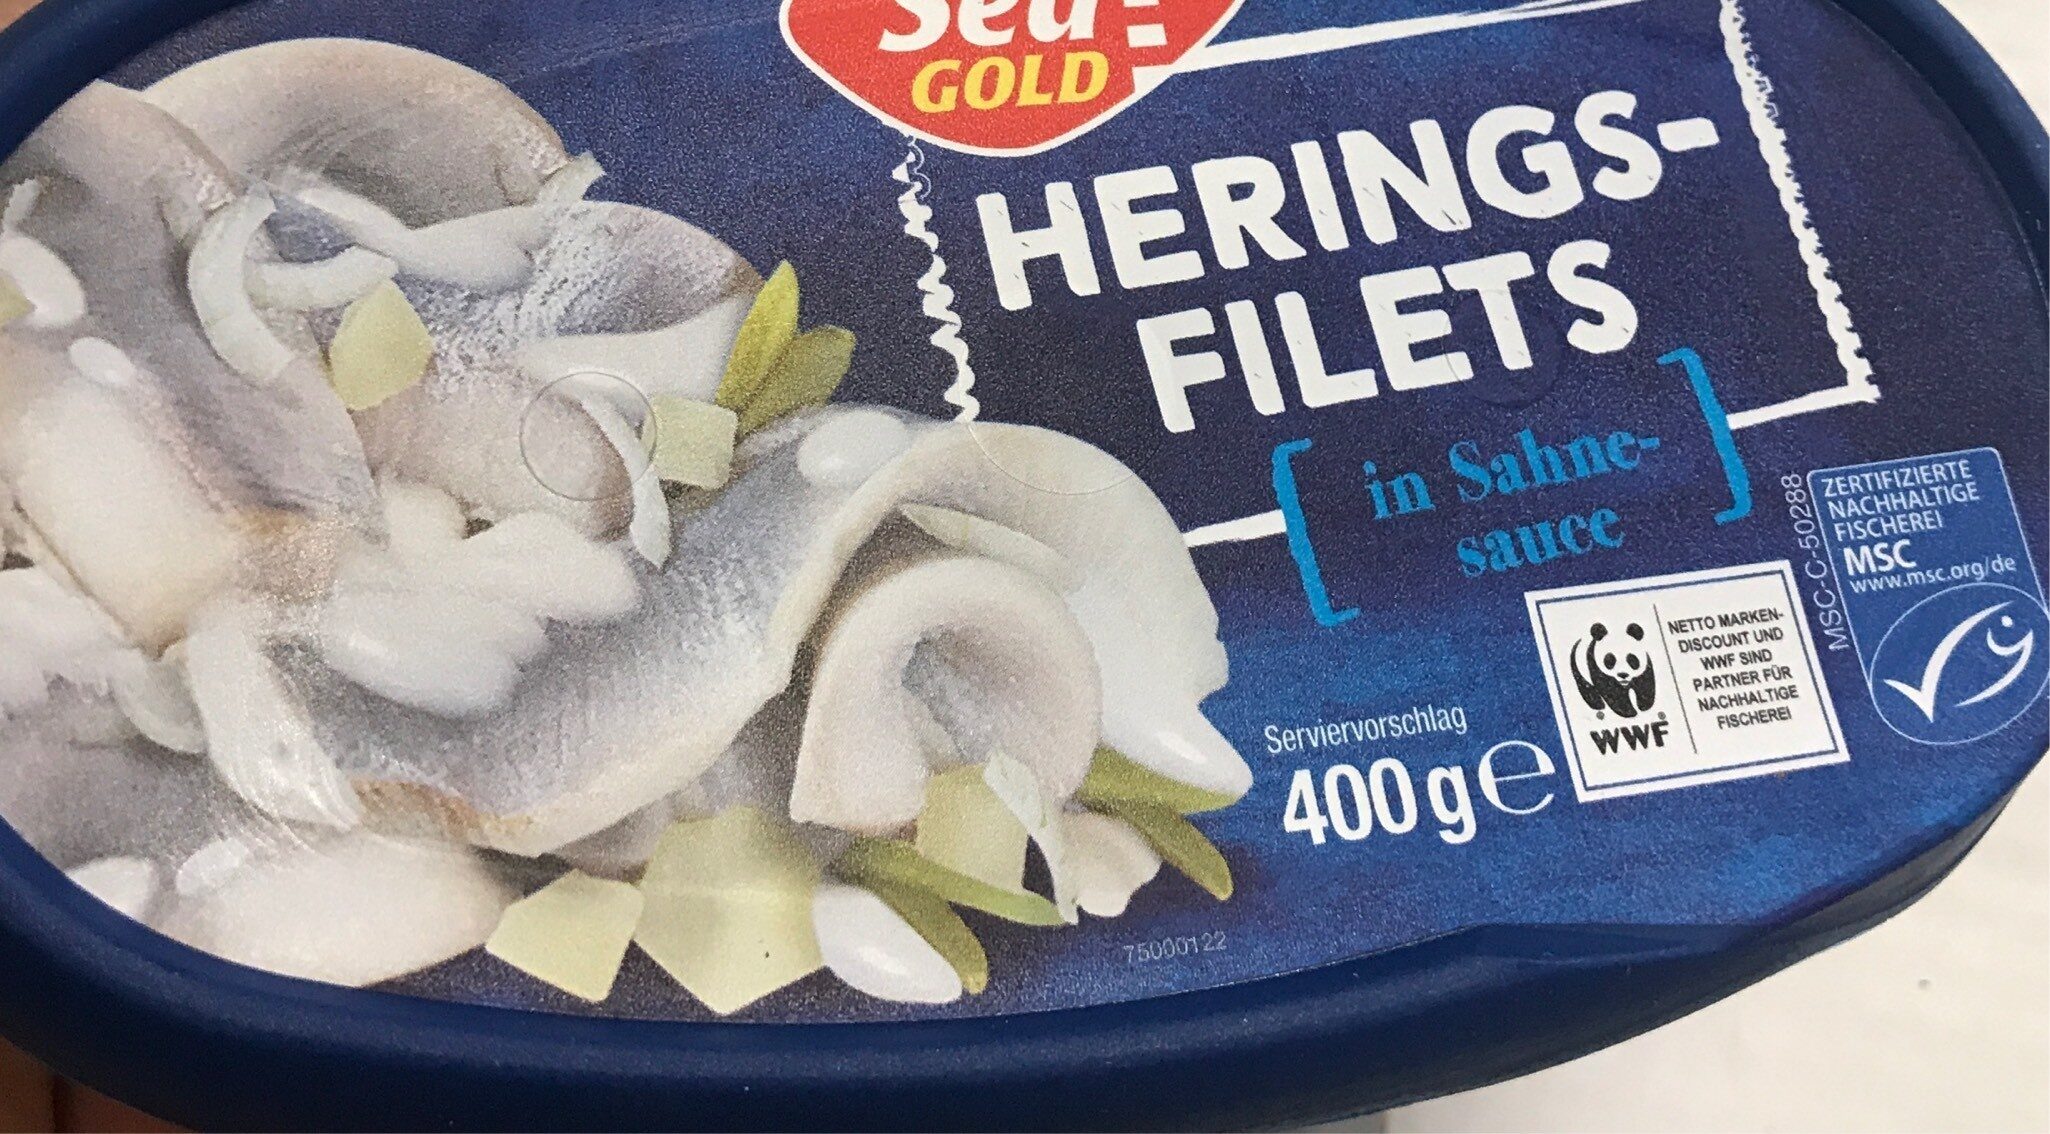 Herings-Filets - Produkt